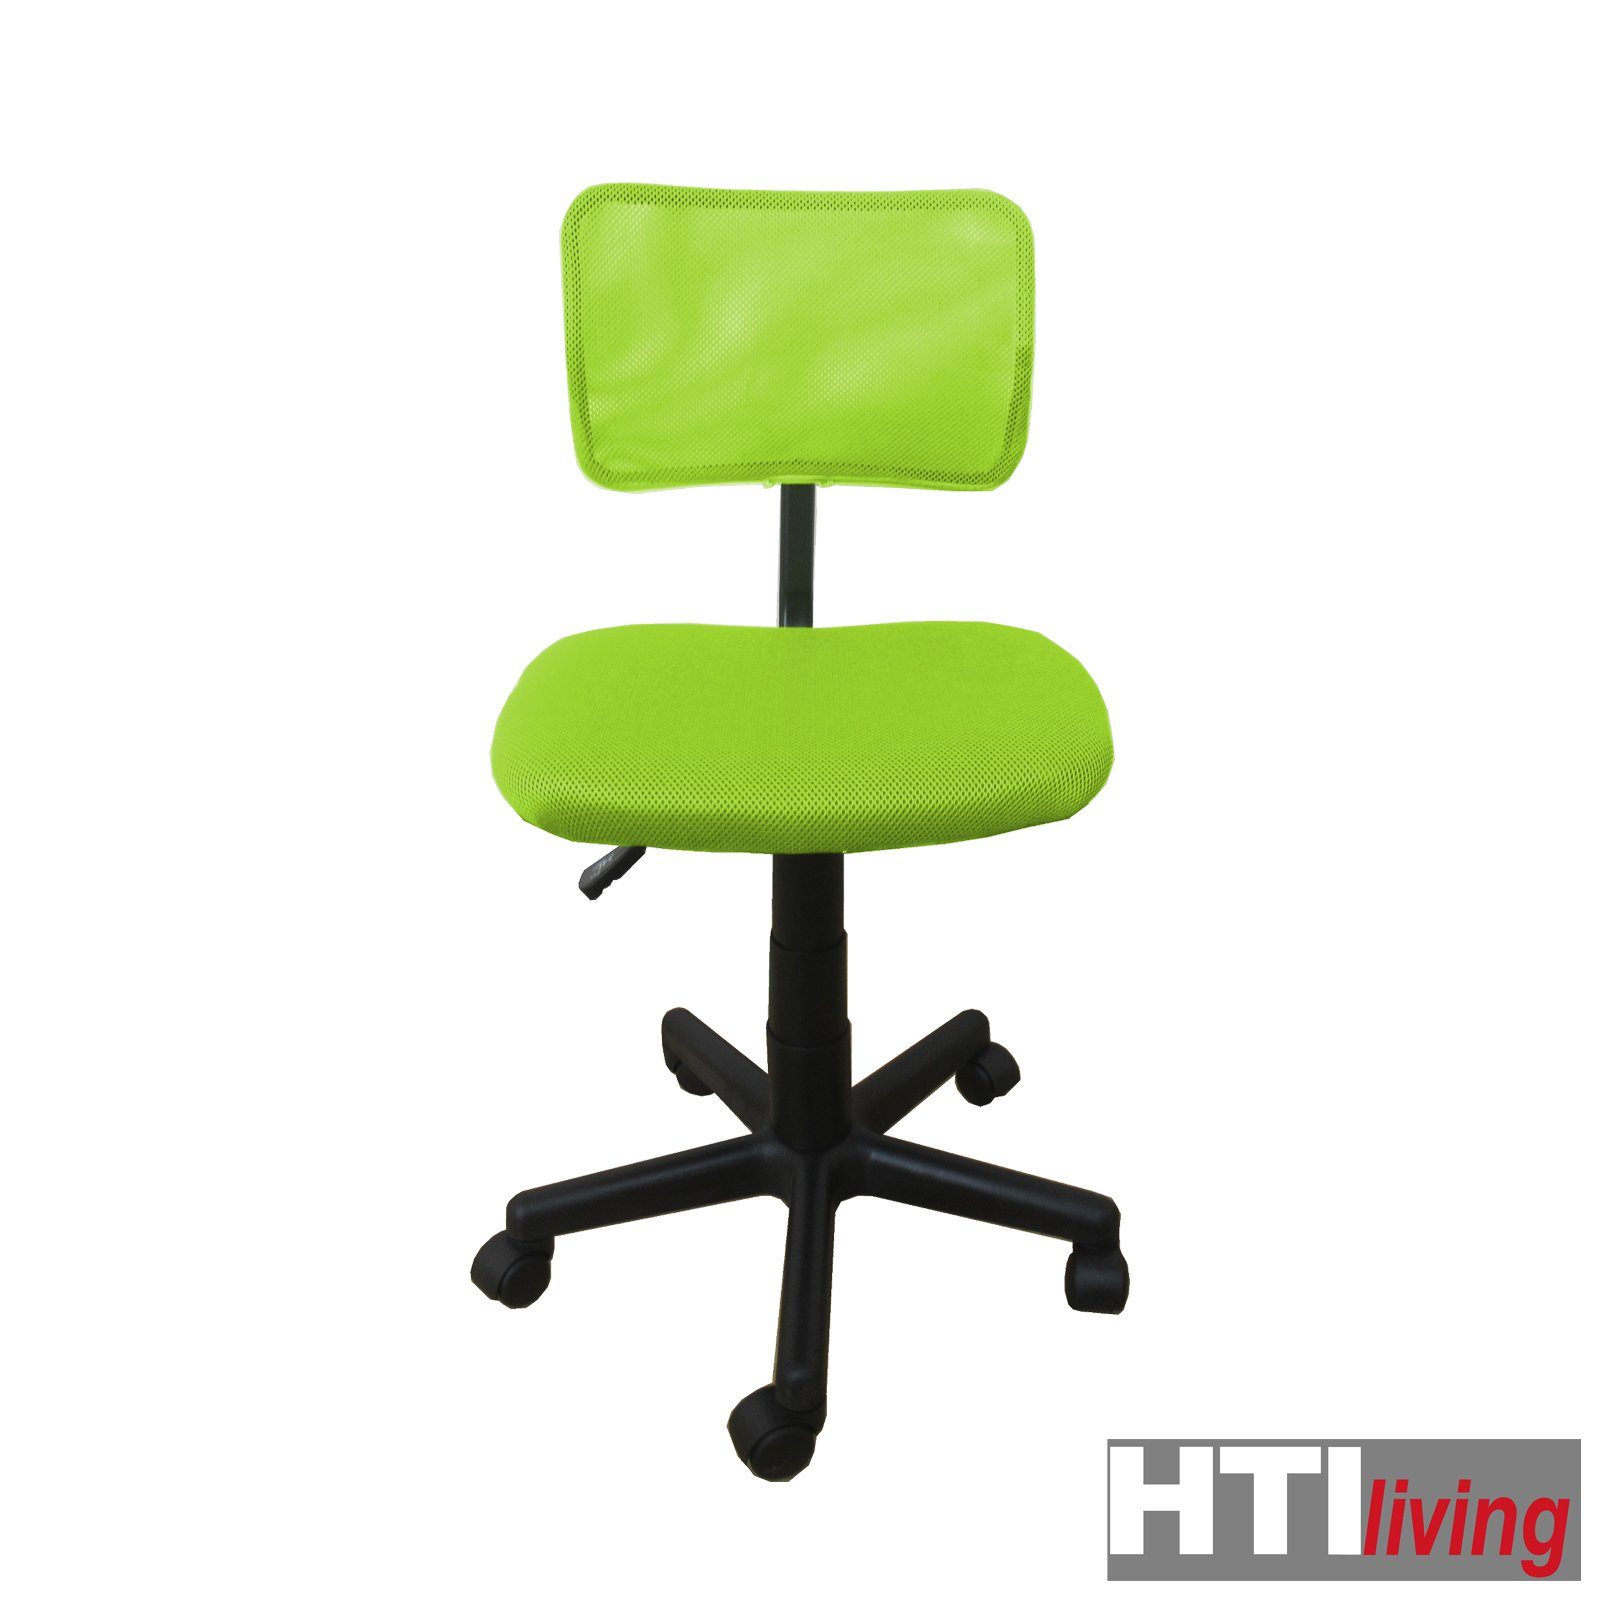 HTI-Living Drehstuhl Neongrün 1 Schreibtischstuhl St), Drehstuhl höhenverstellbar (Stück, Fancy